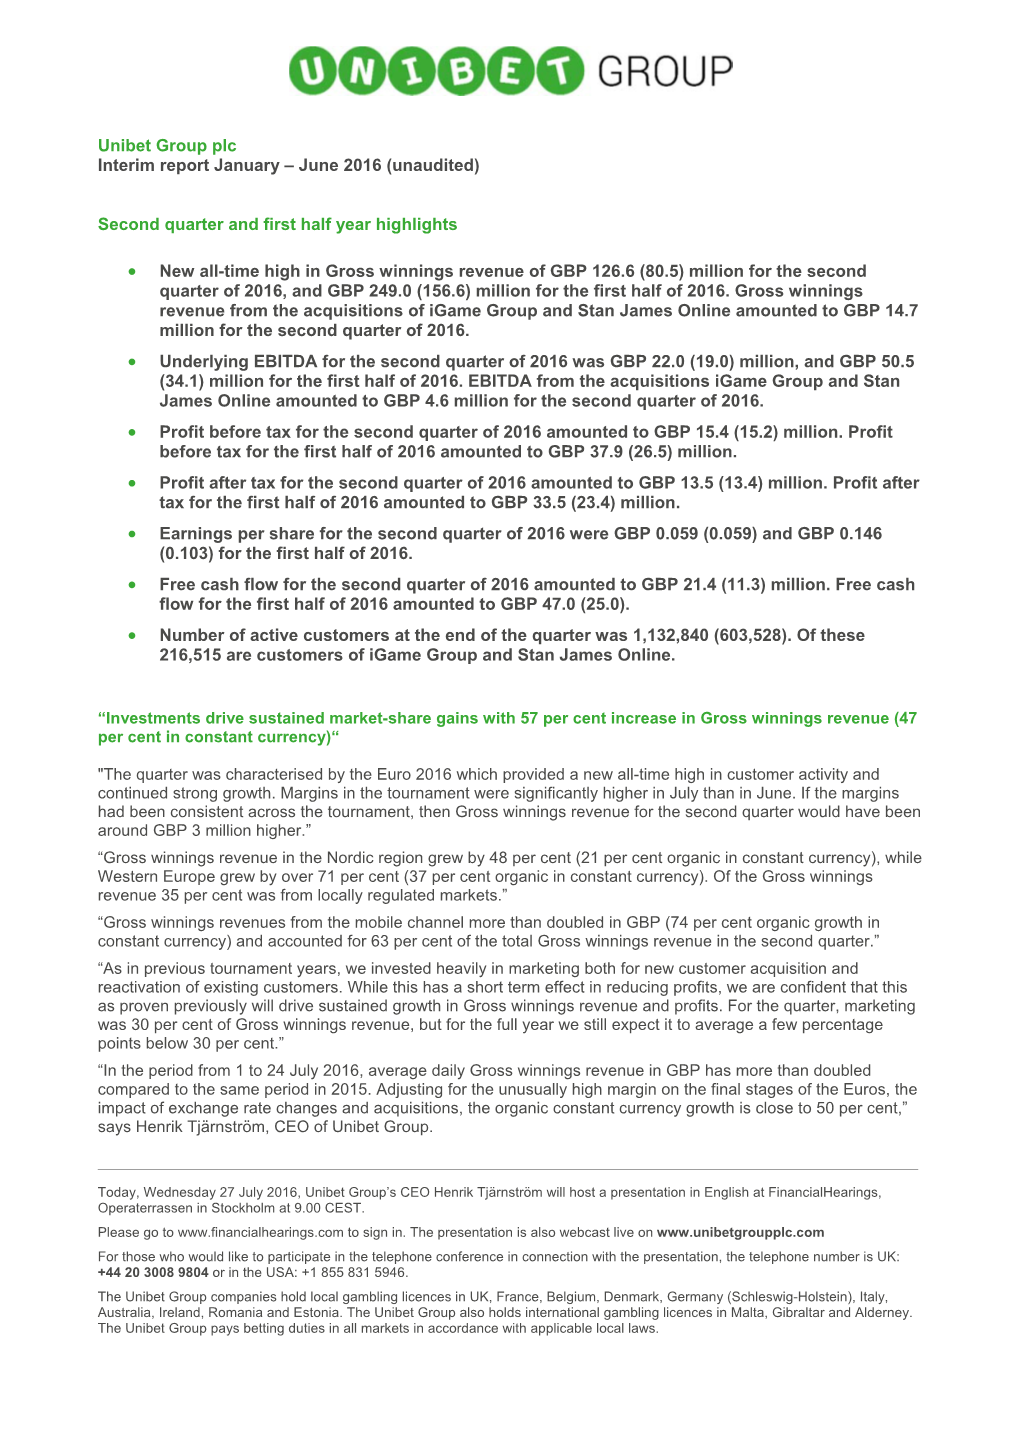 Unibet Group Plc Interim Report January – June 2016 (Unaudited)